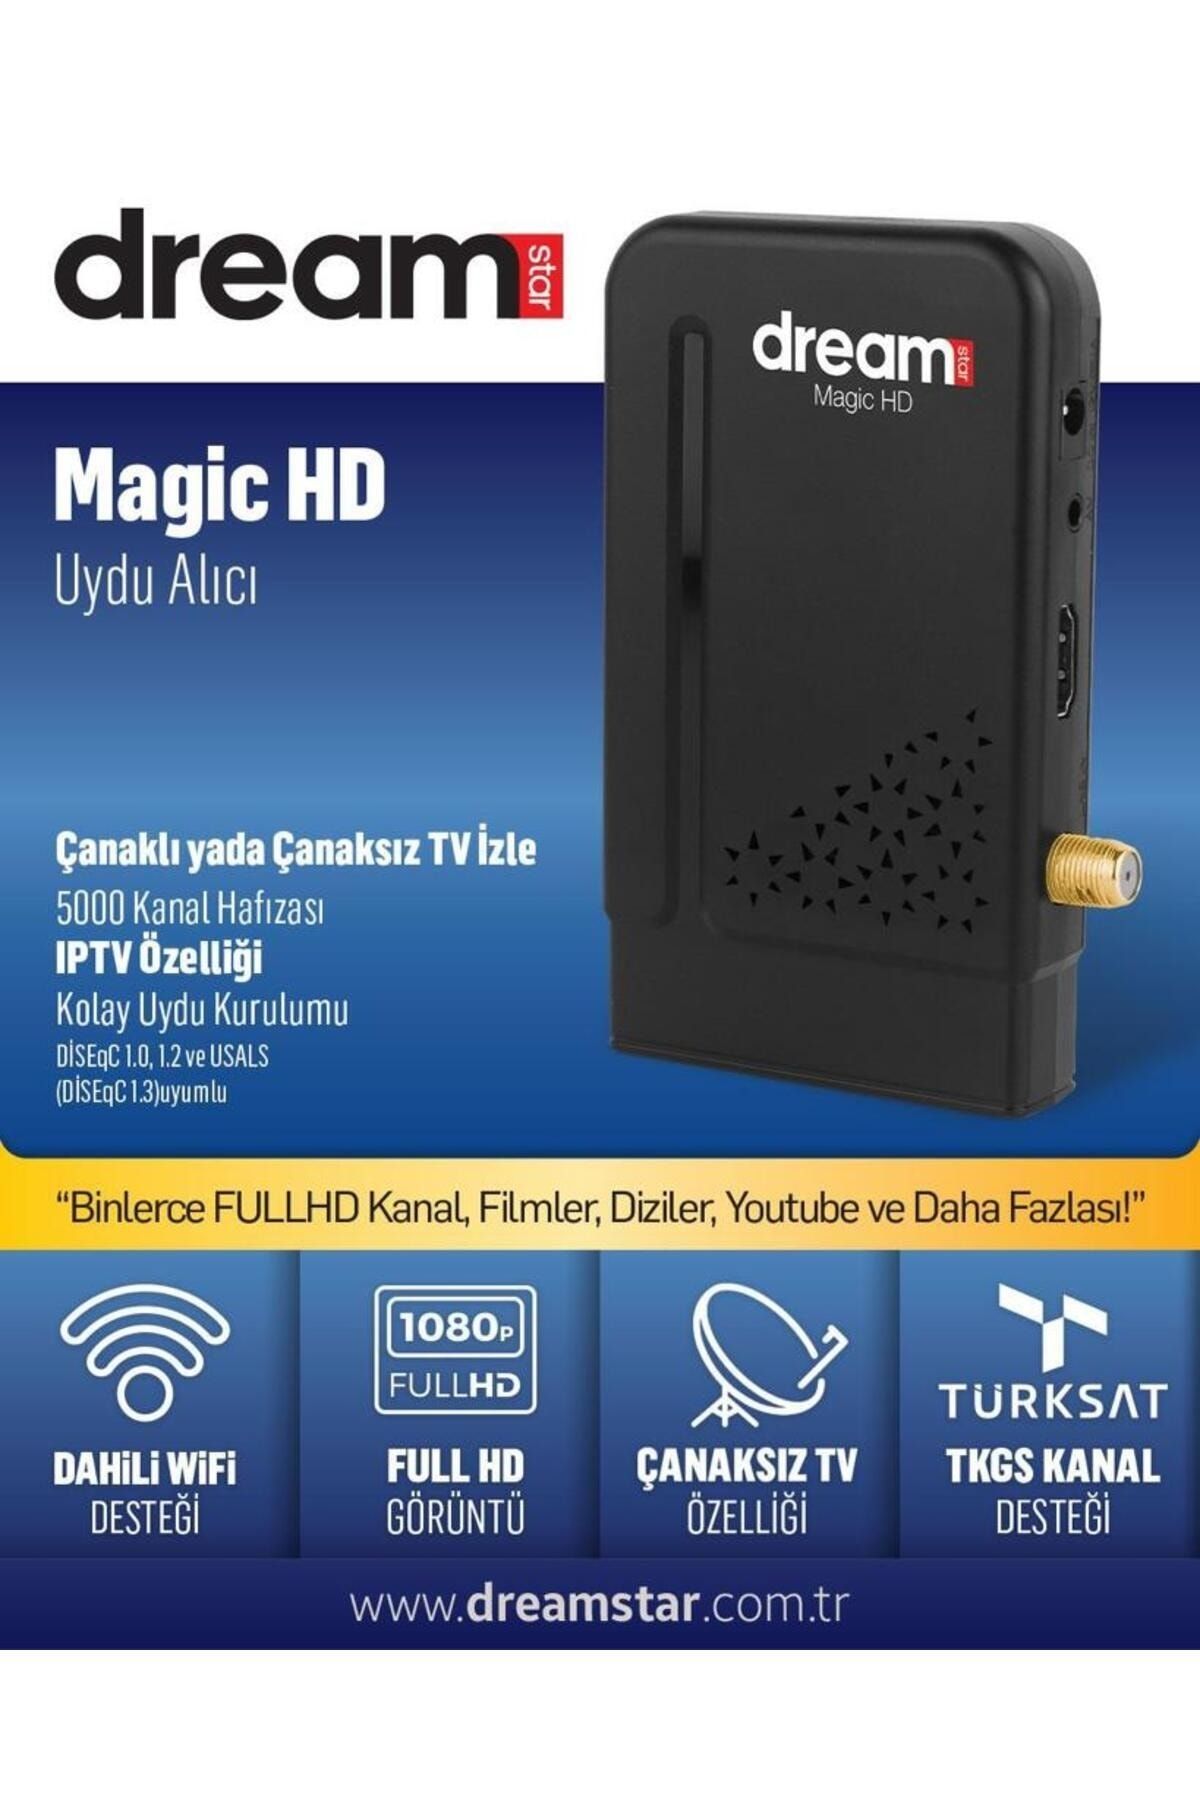 Dreamstar Full HD Dahili Wifi Mini Uydu Alıcı TKGS Güncelleme MAGİC HD